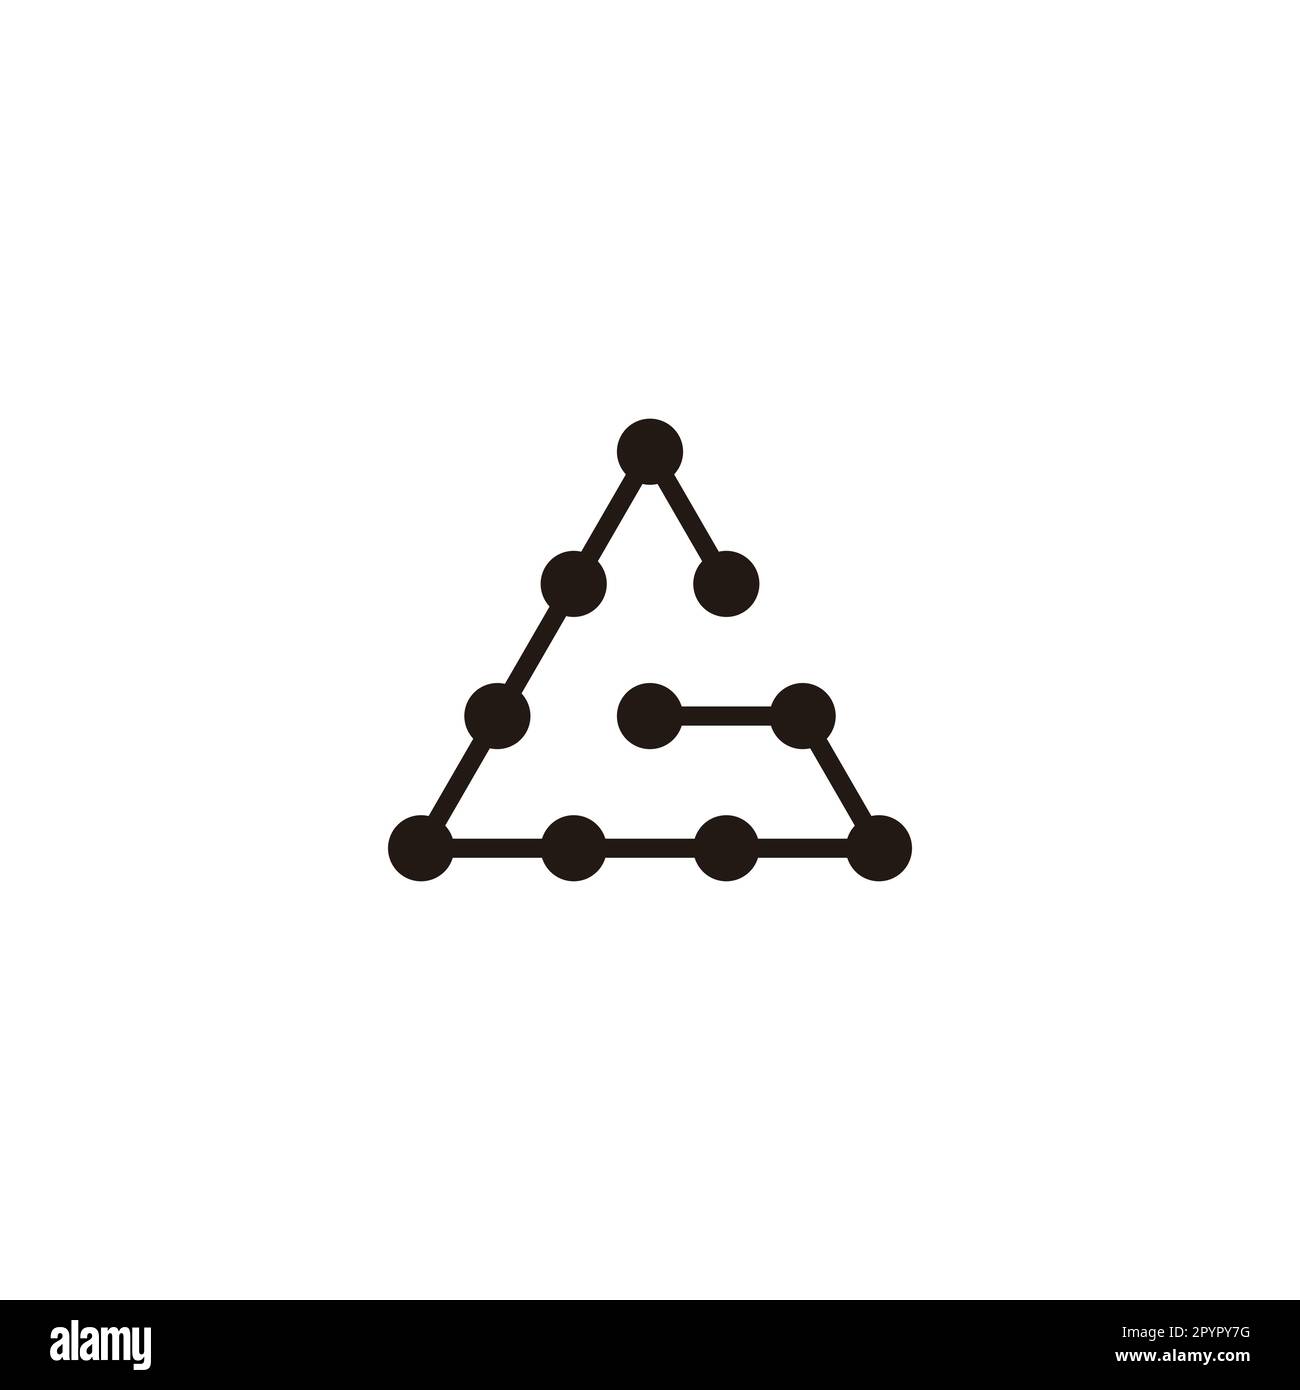 Letter G molecules, triangle geometric symbol simple logo vector Stock Vector